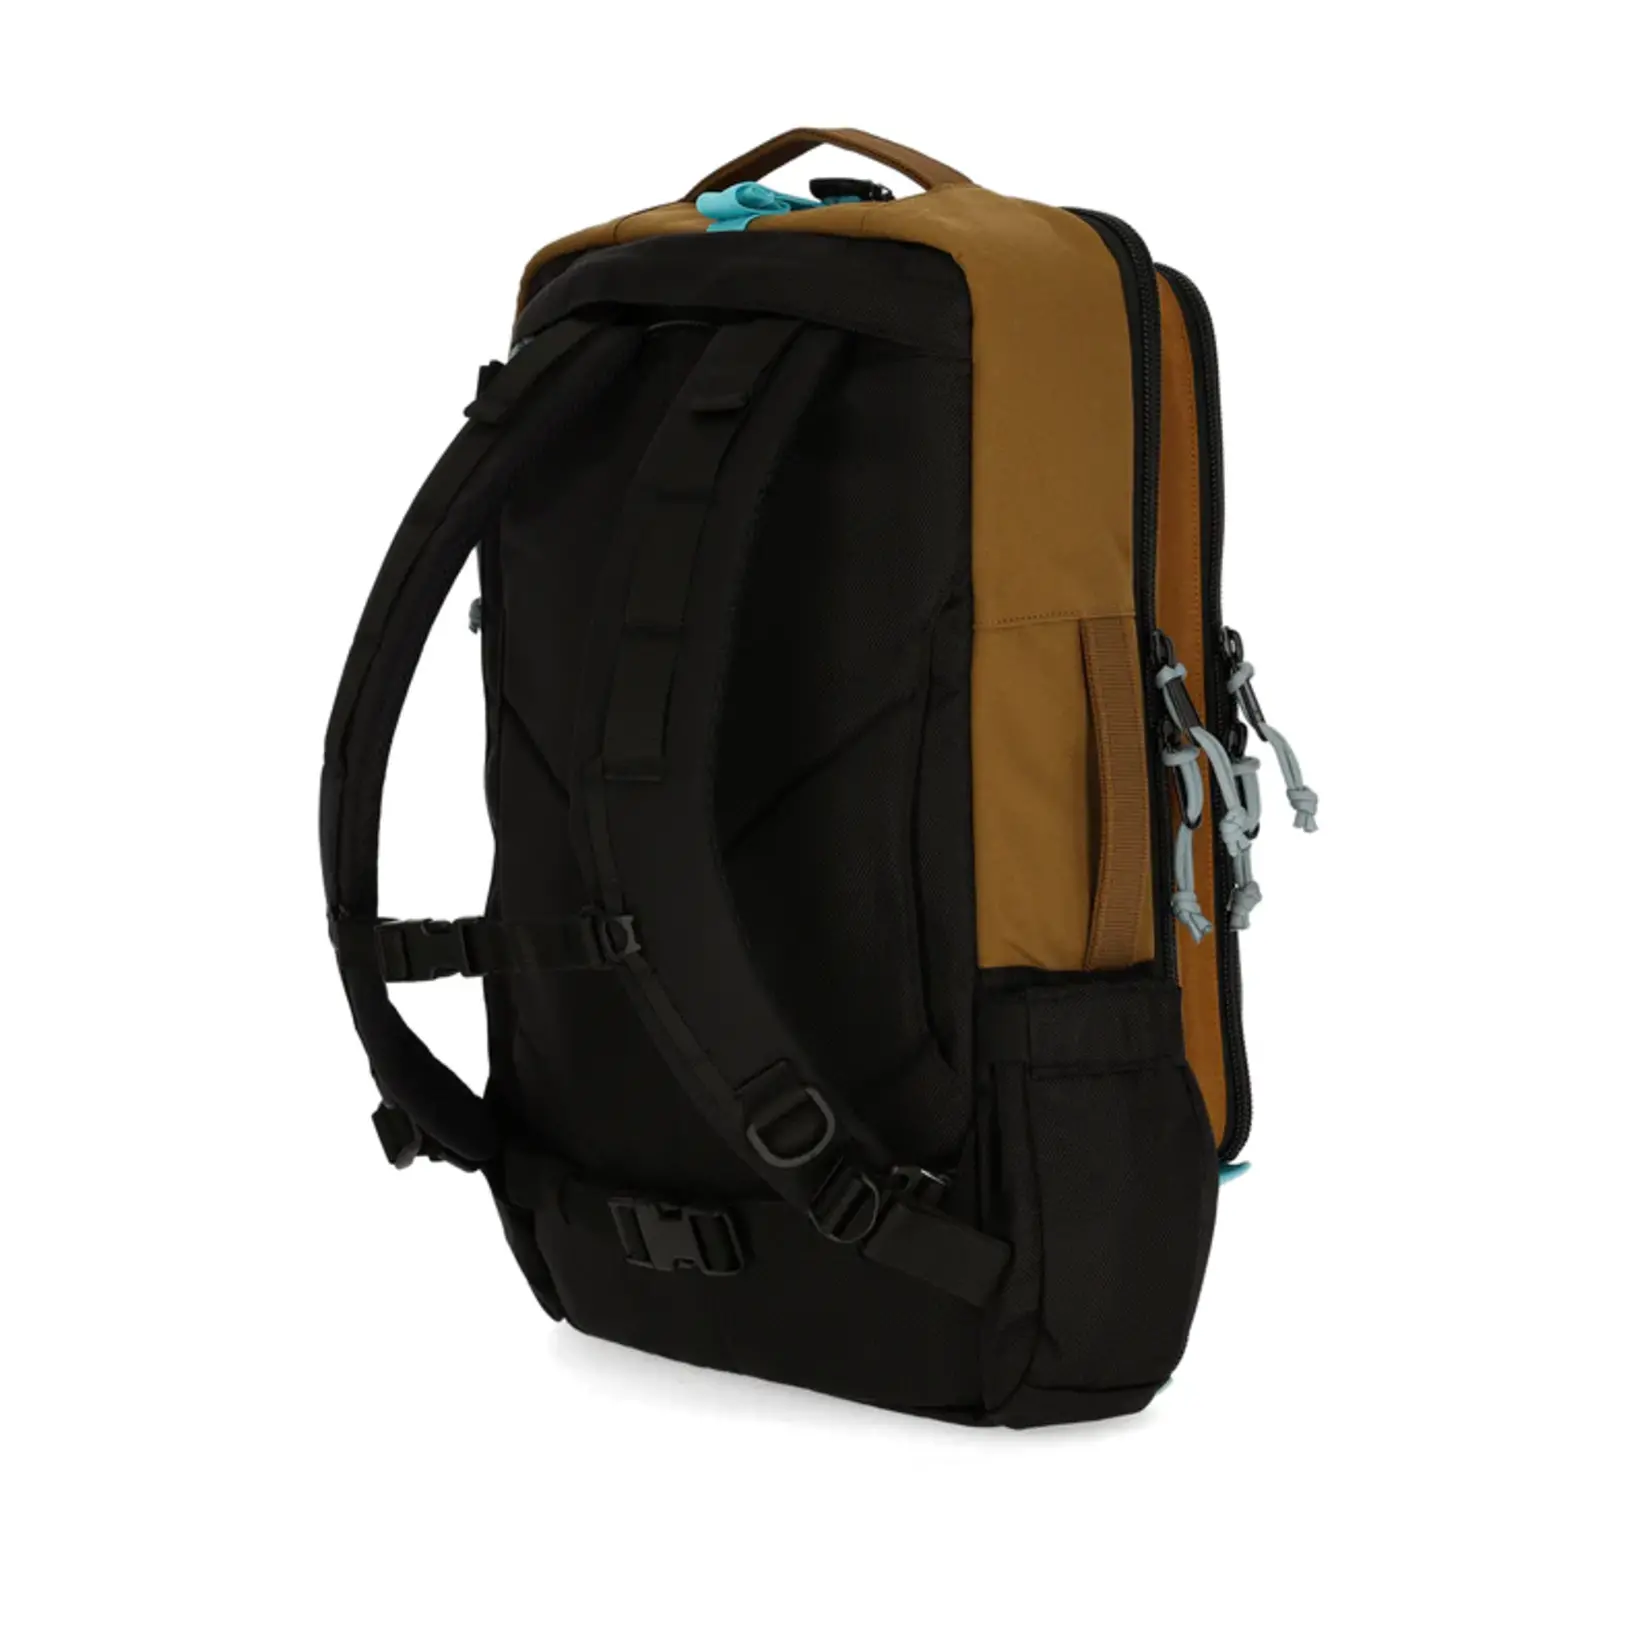 Topo Designs Topo Designs Global Travel Bag, 30L